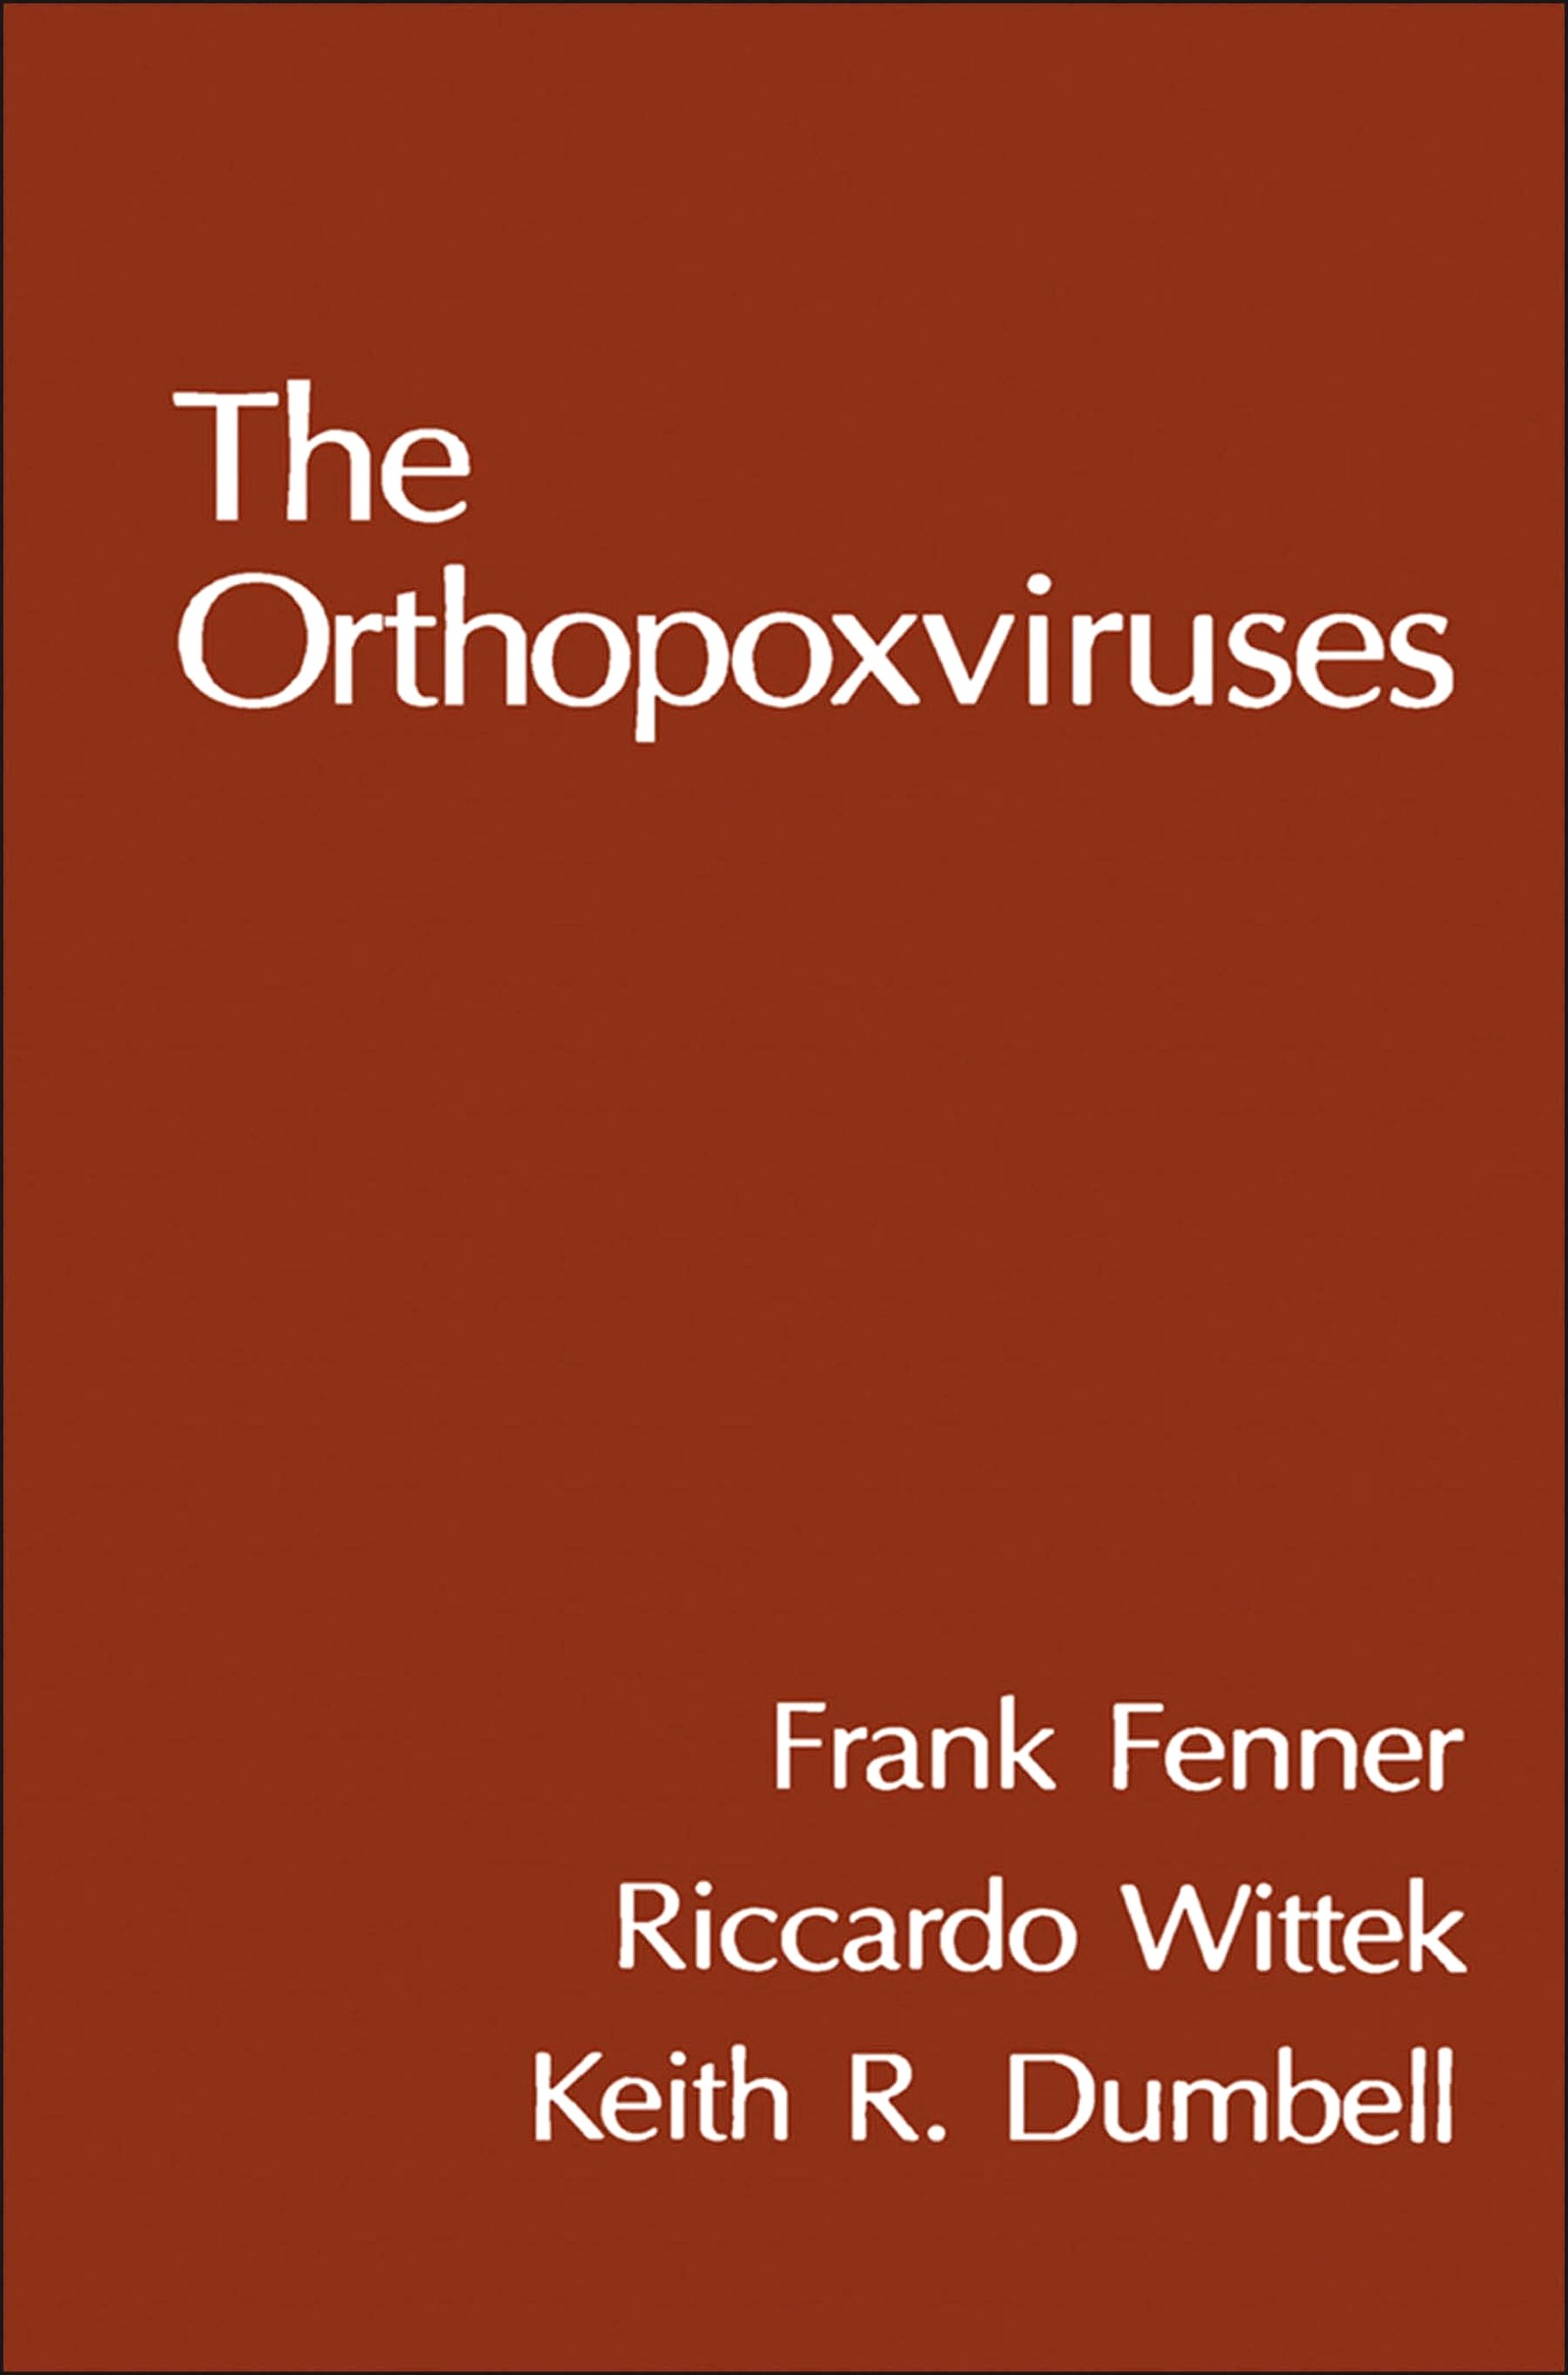 The orthopoxviruses